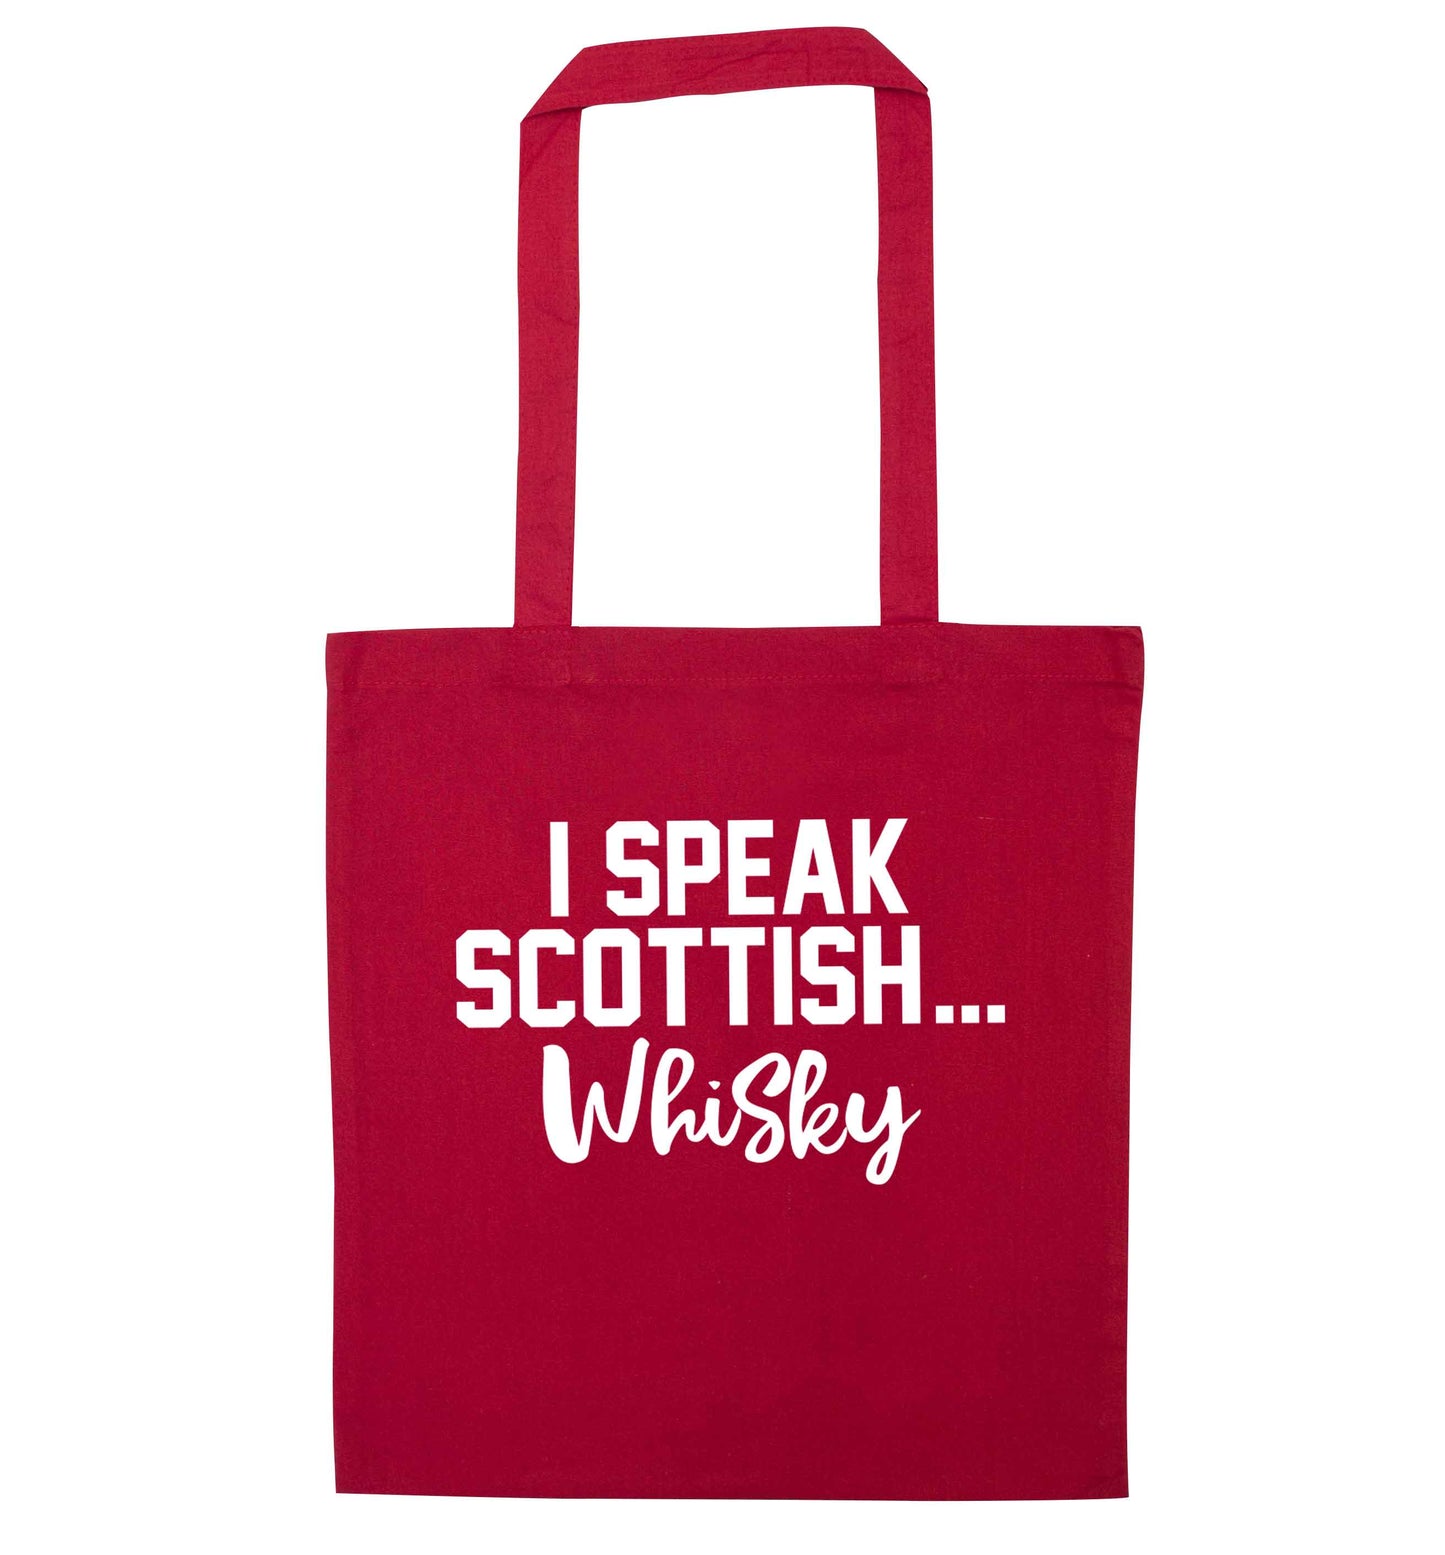 I speak scottish...whisky red tote bag